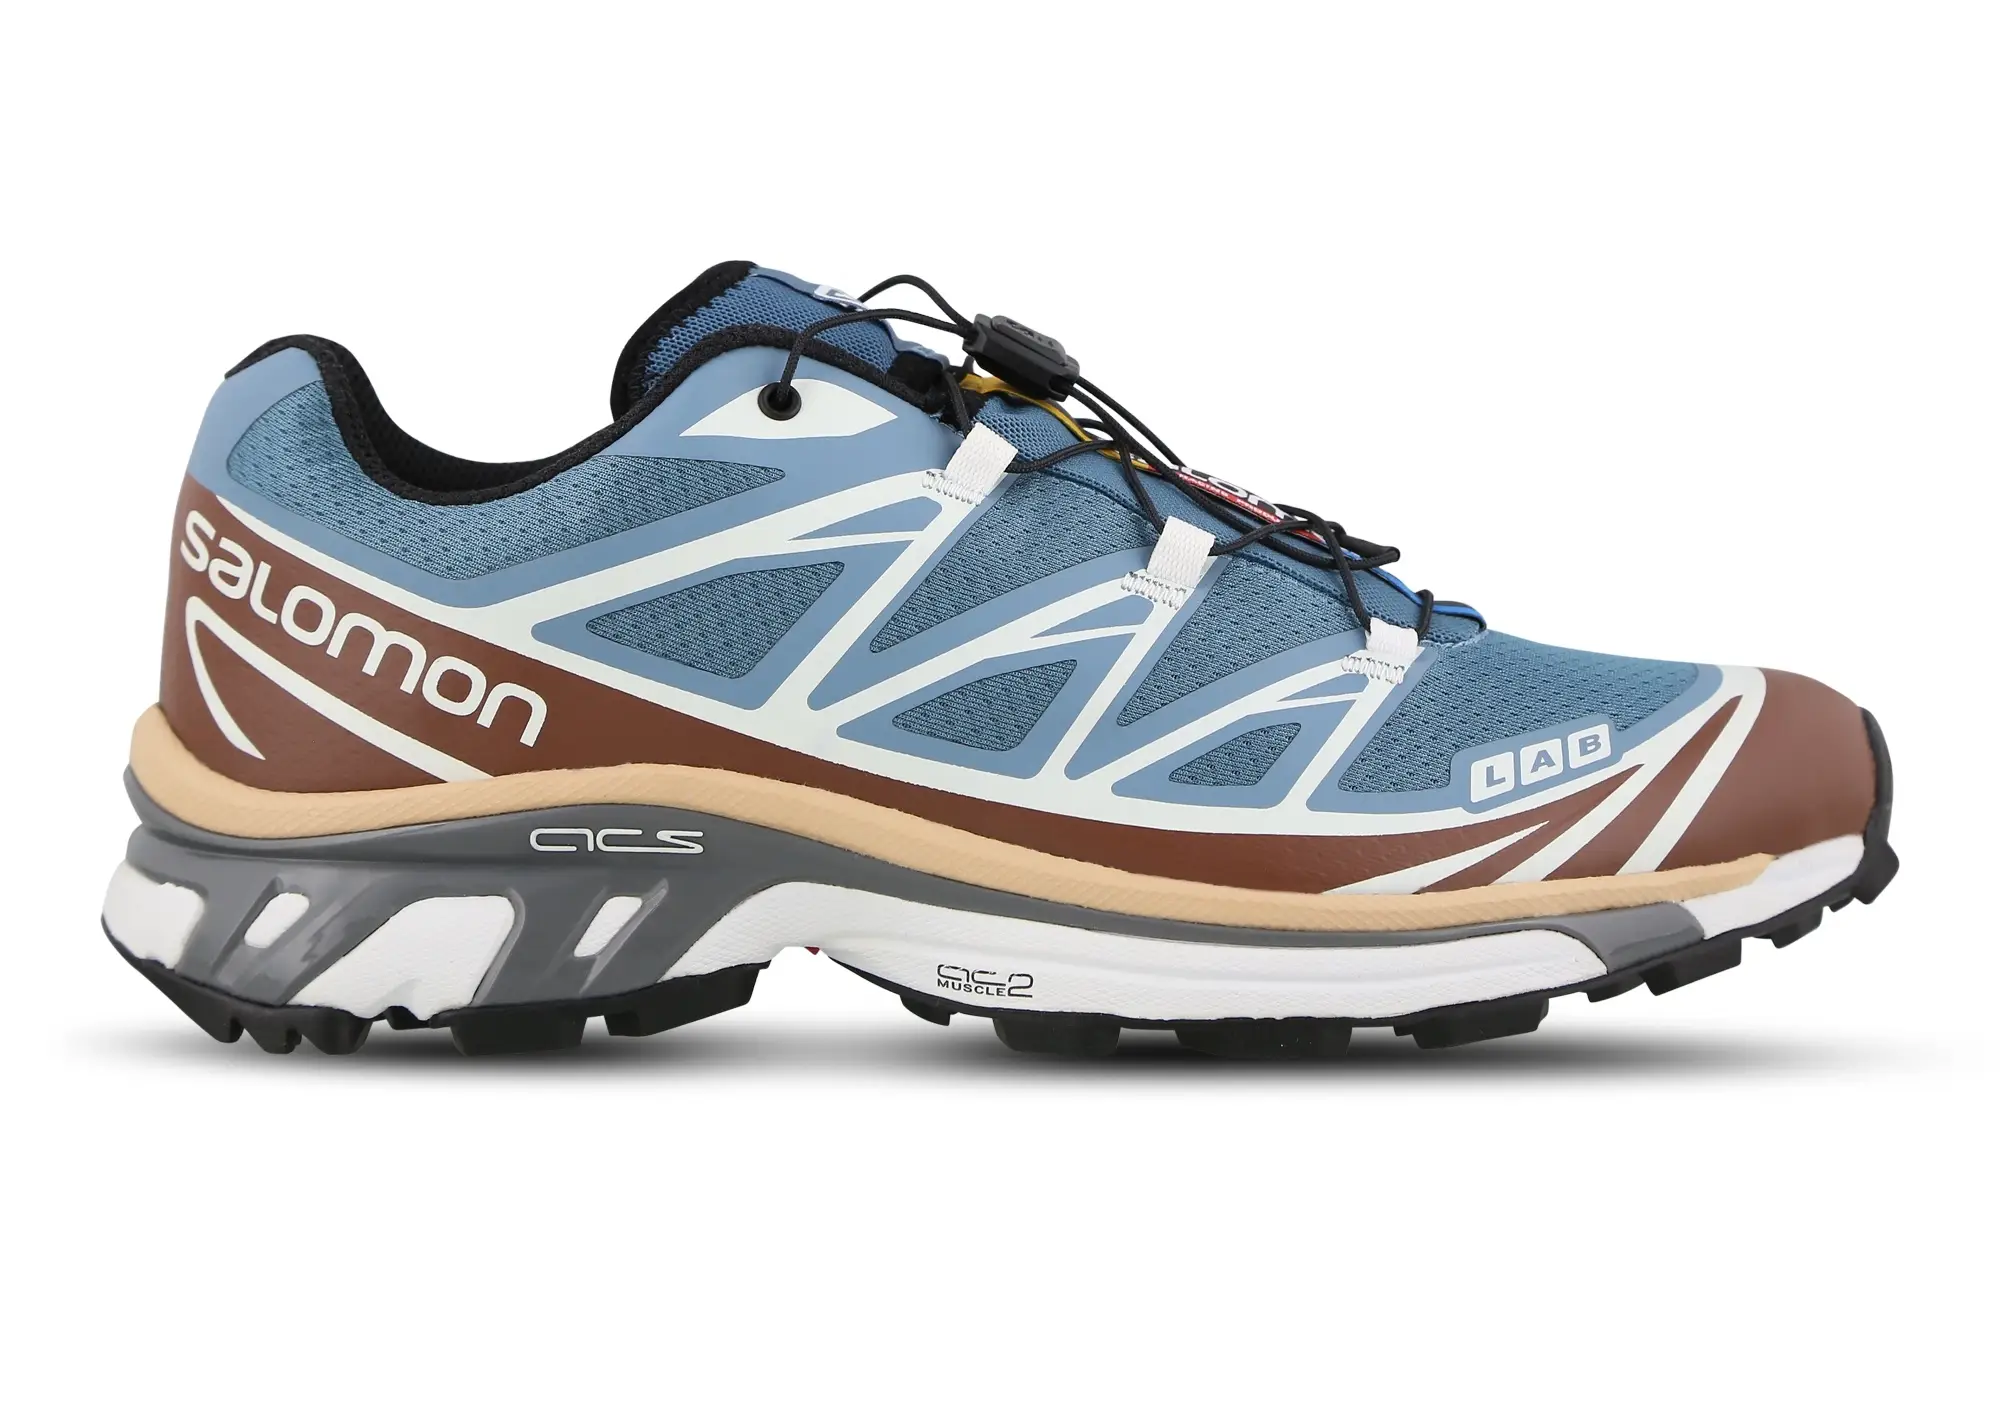 Non-waterproof Salomon shoes start from $80 - L47293100